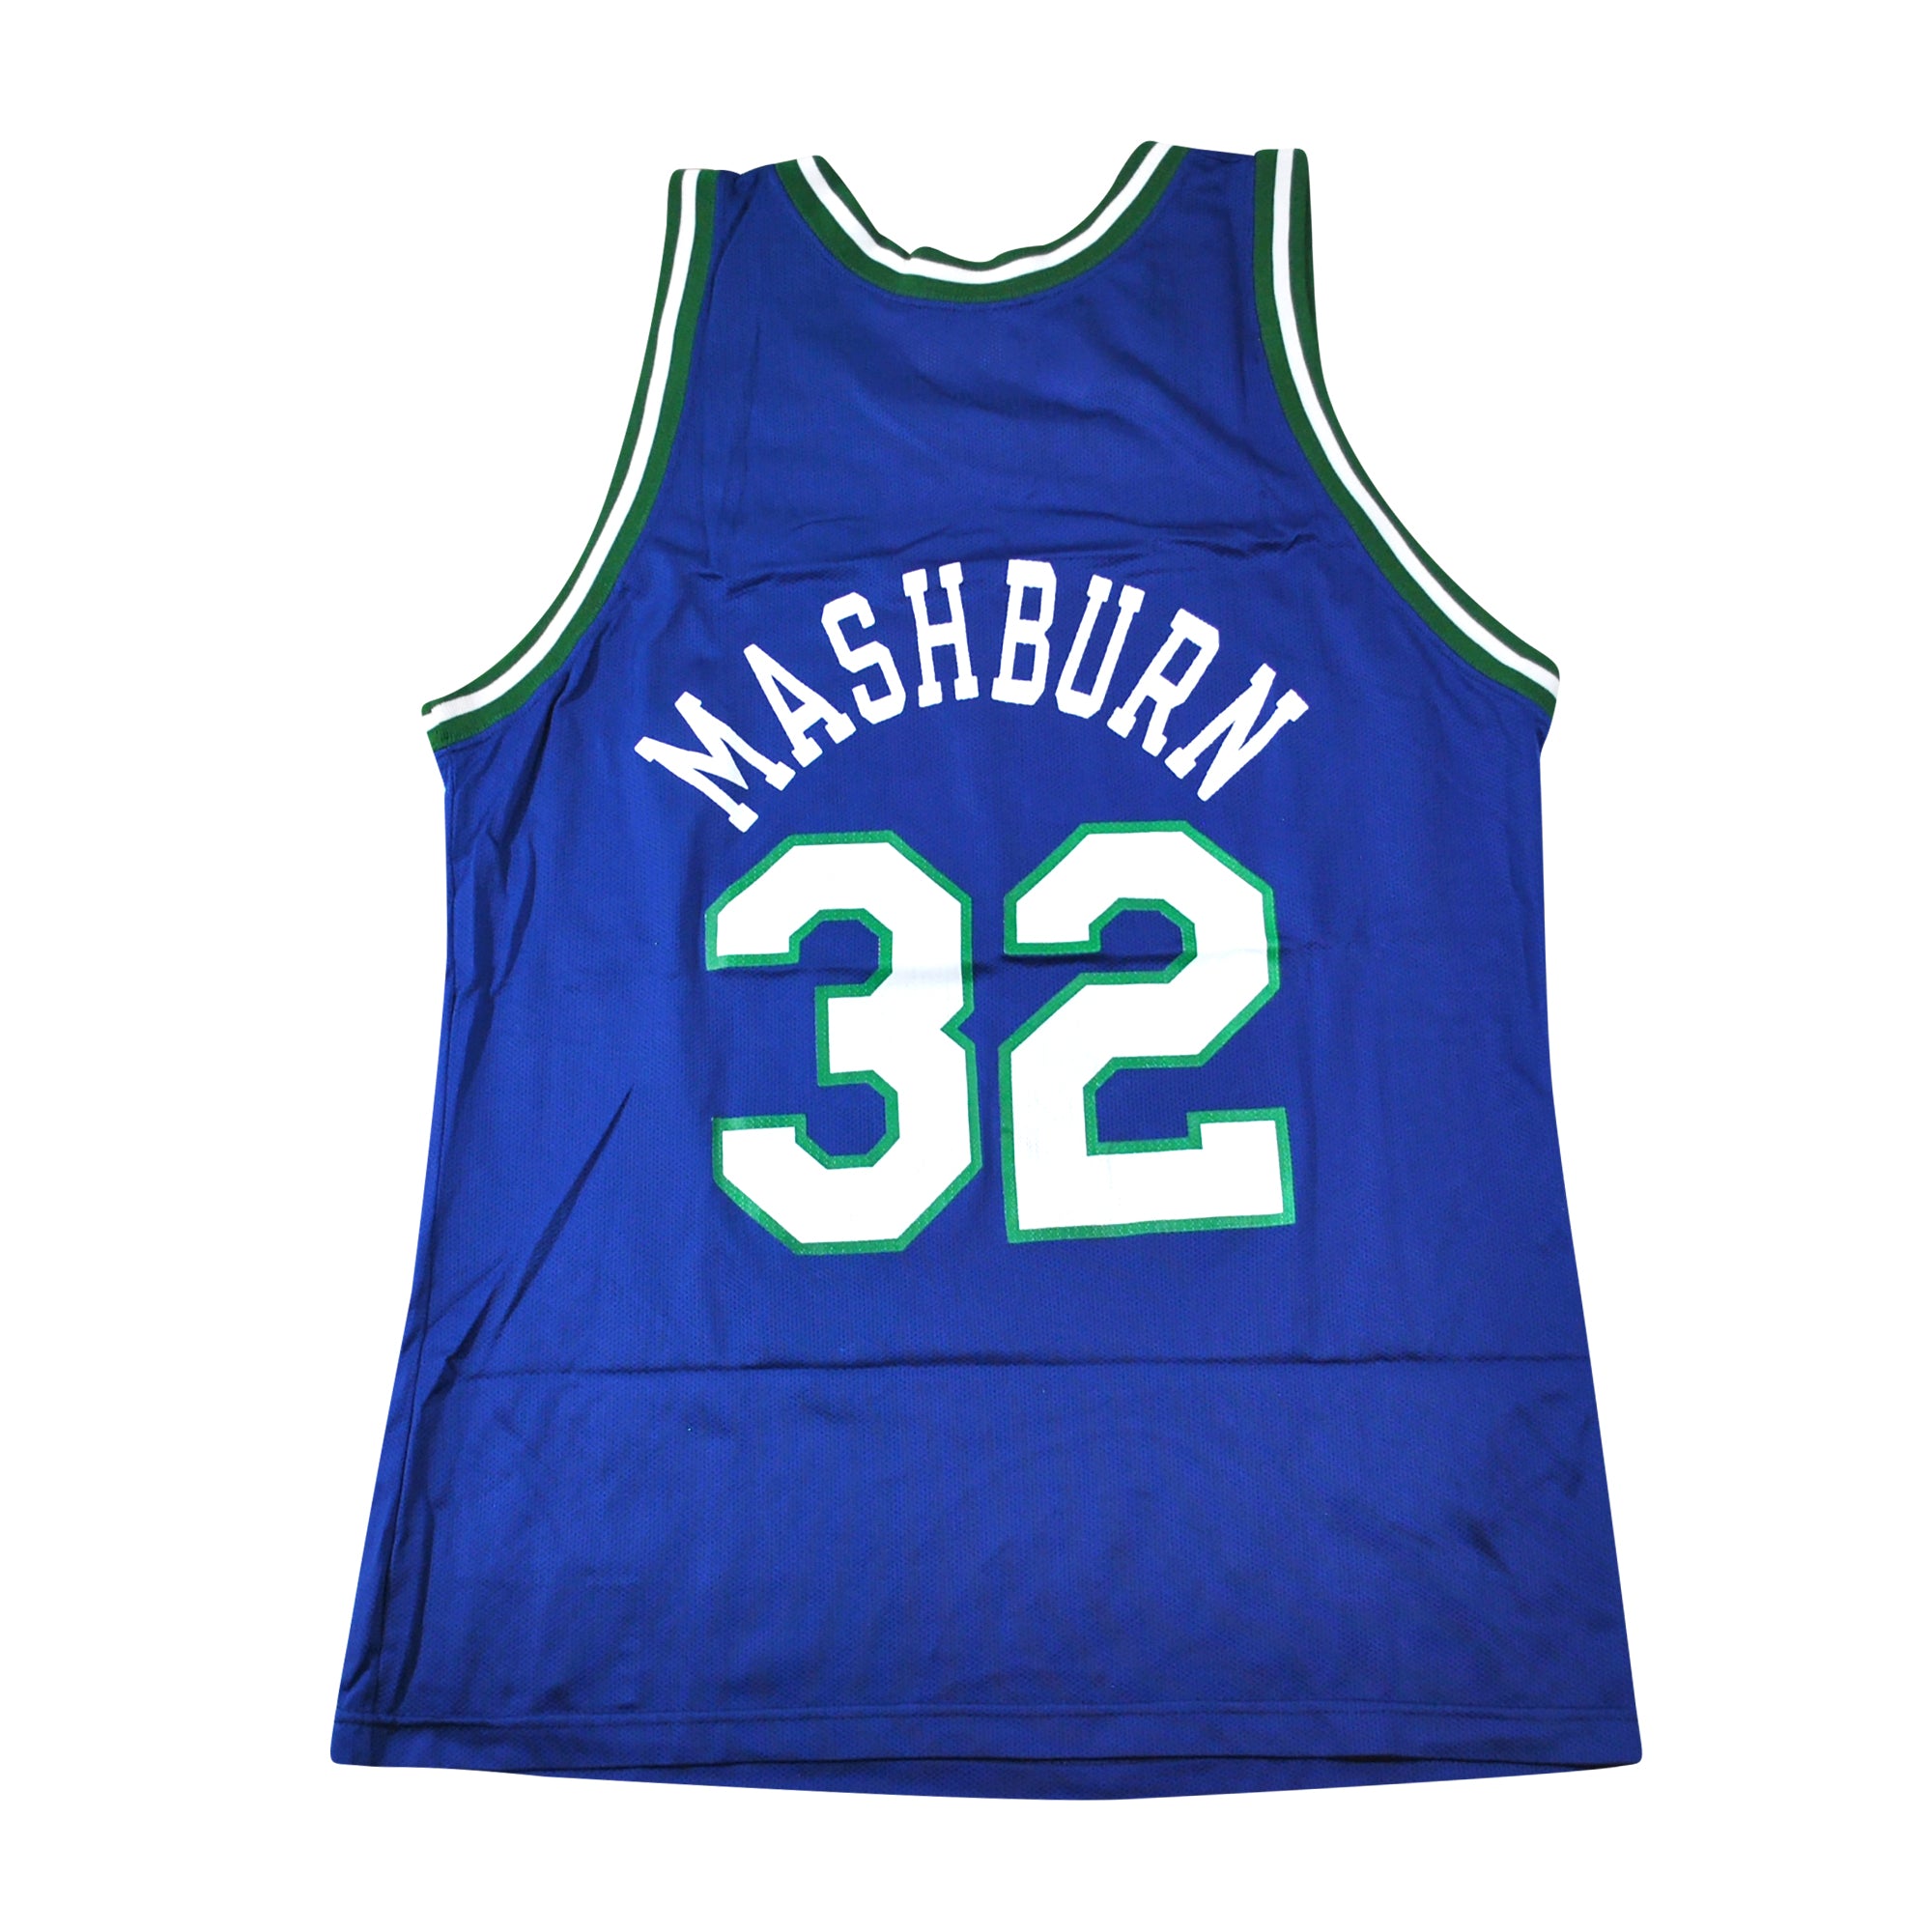 Jamal Mashburn Mavericks jersey